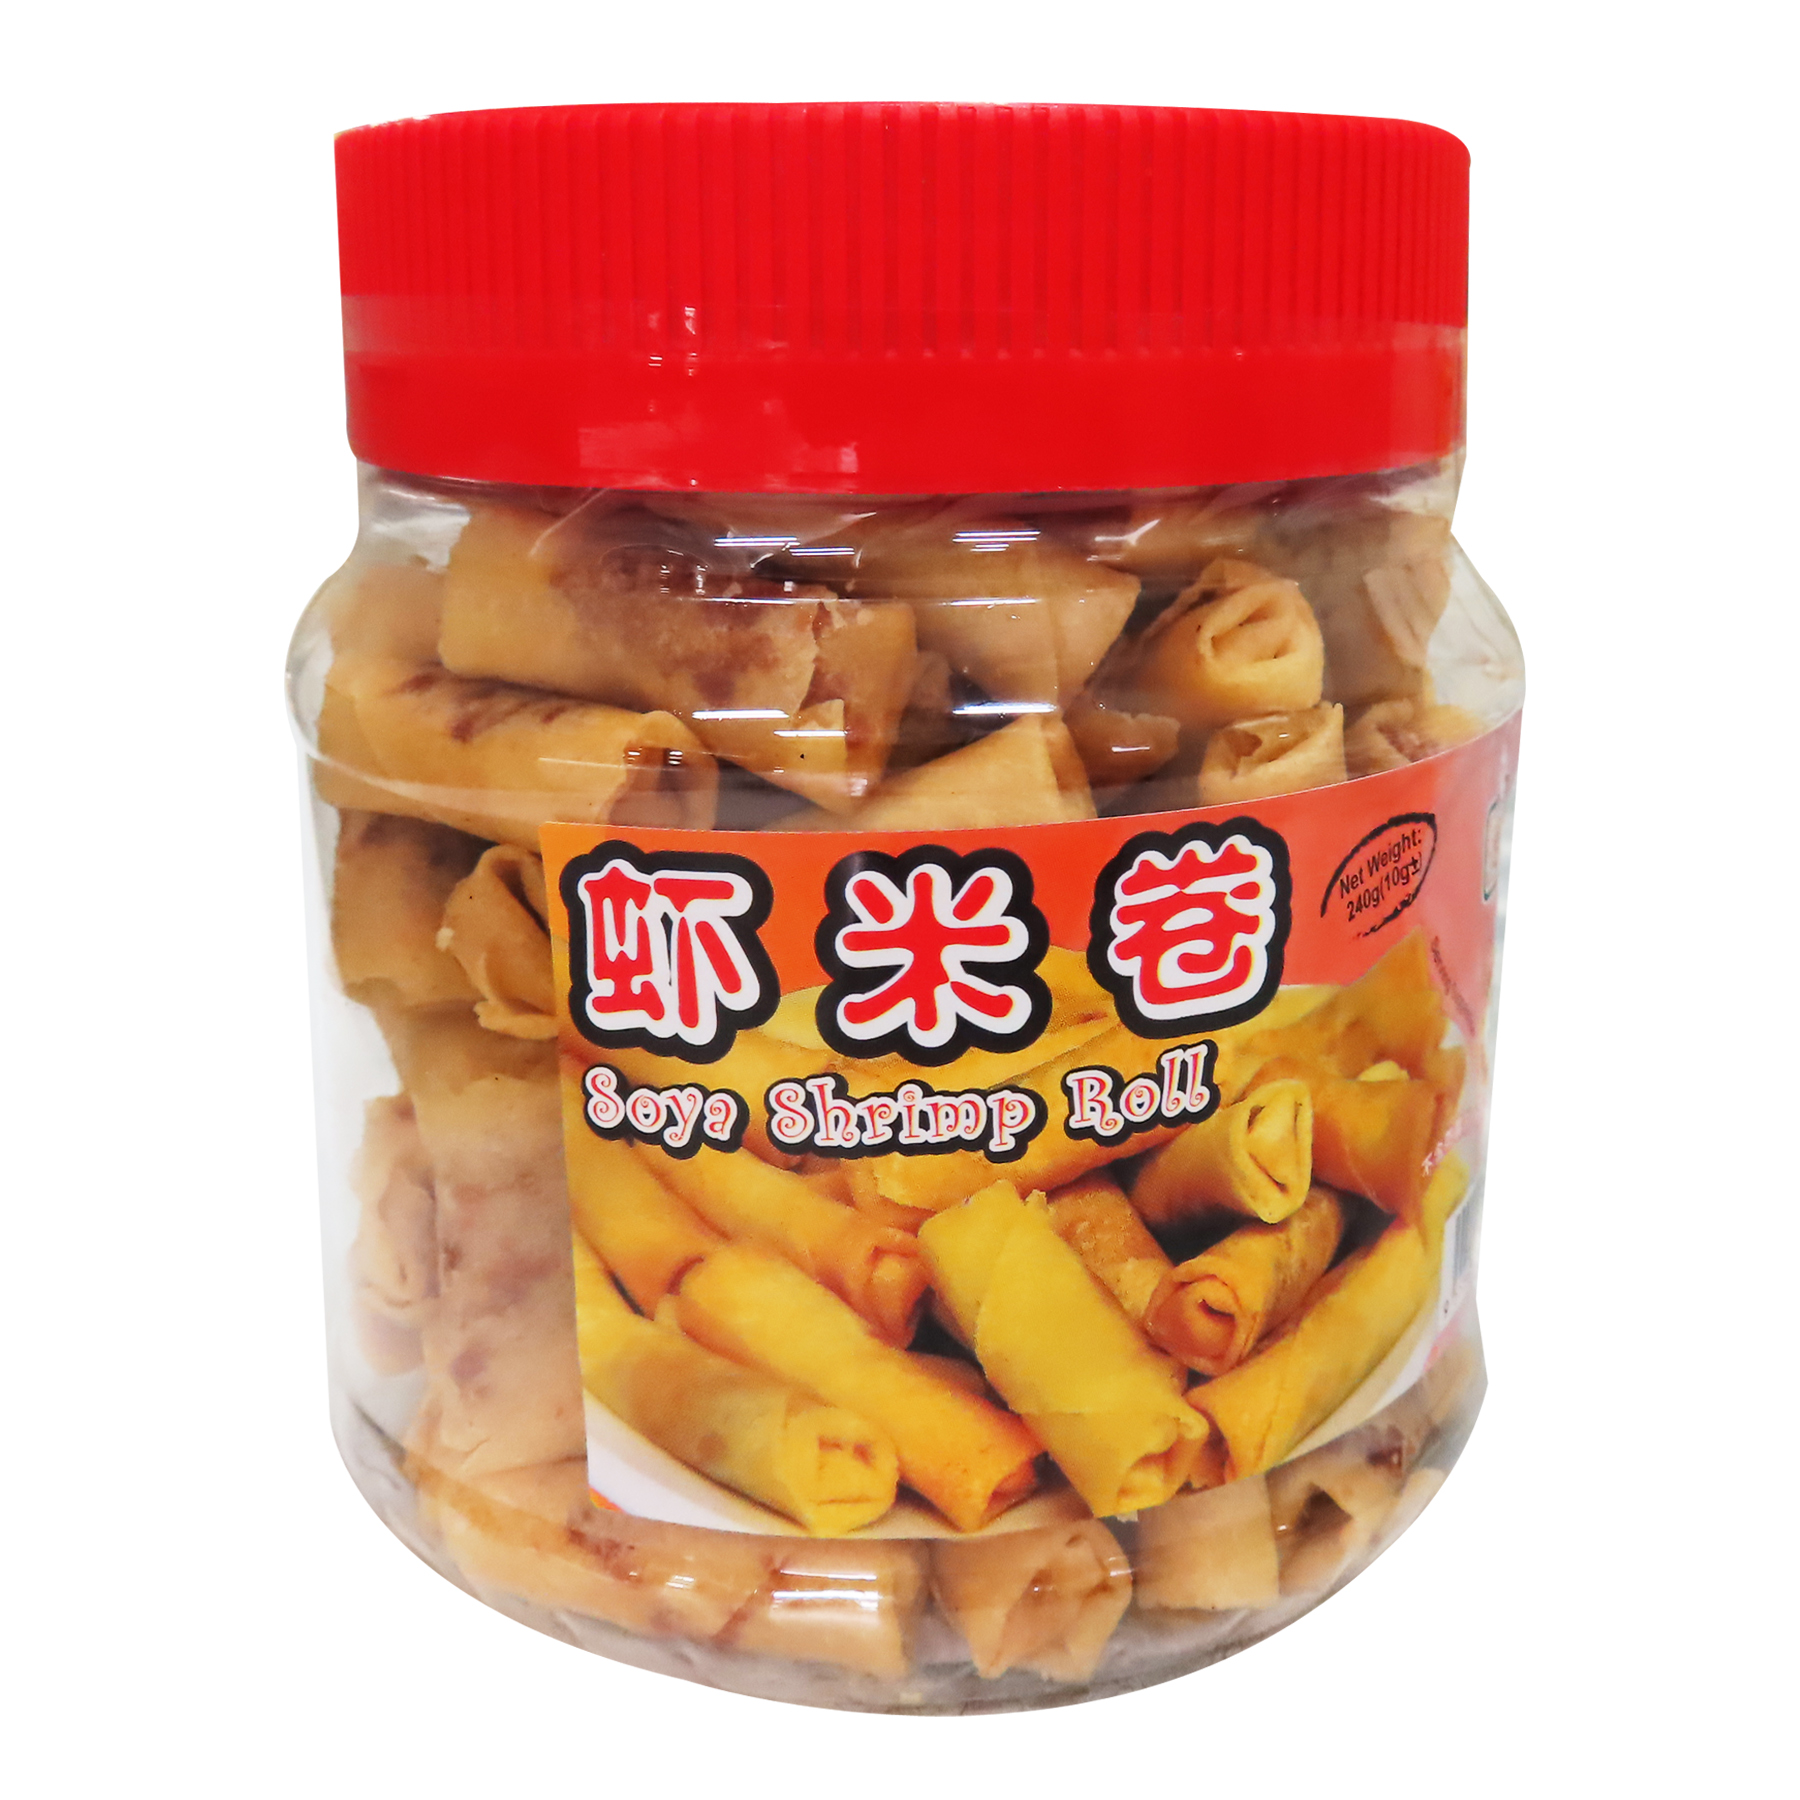 Image Soya Shrimp Roll Hae Bee Hiam Roll 德胜 - 虾米卷 250grams